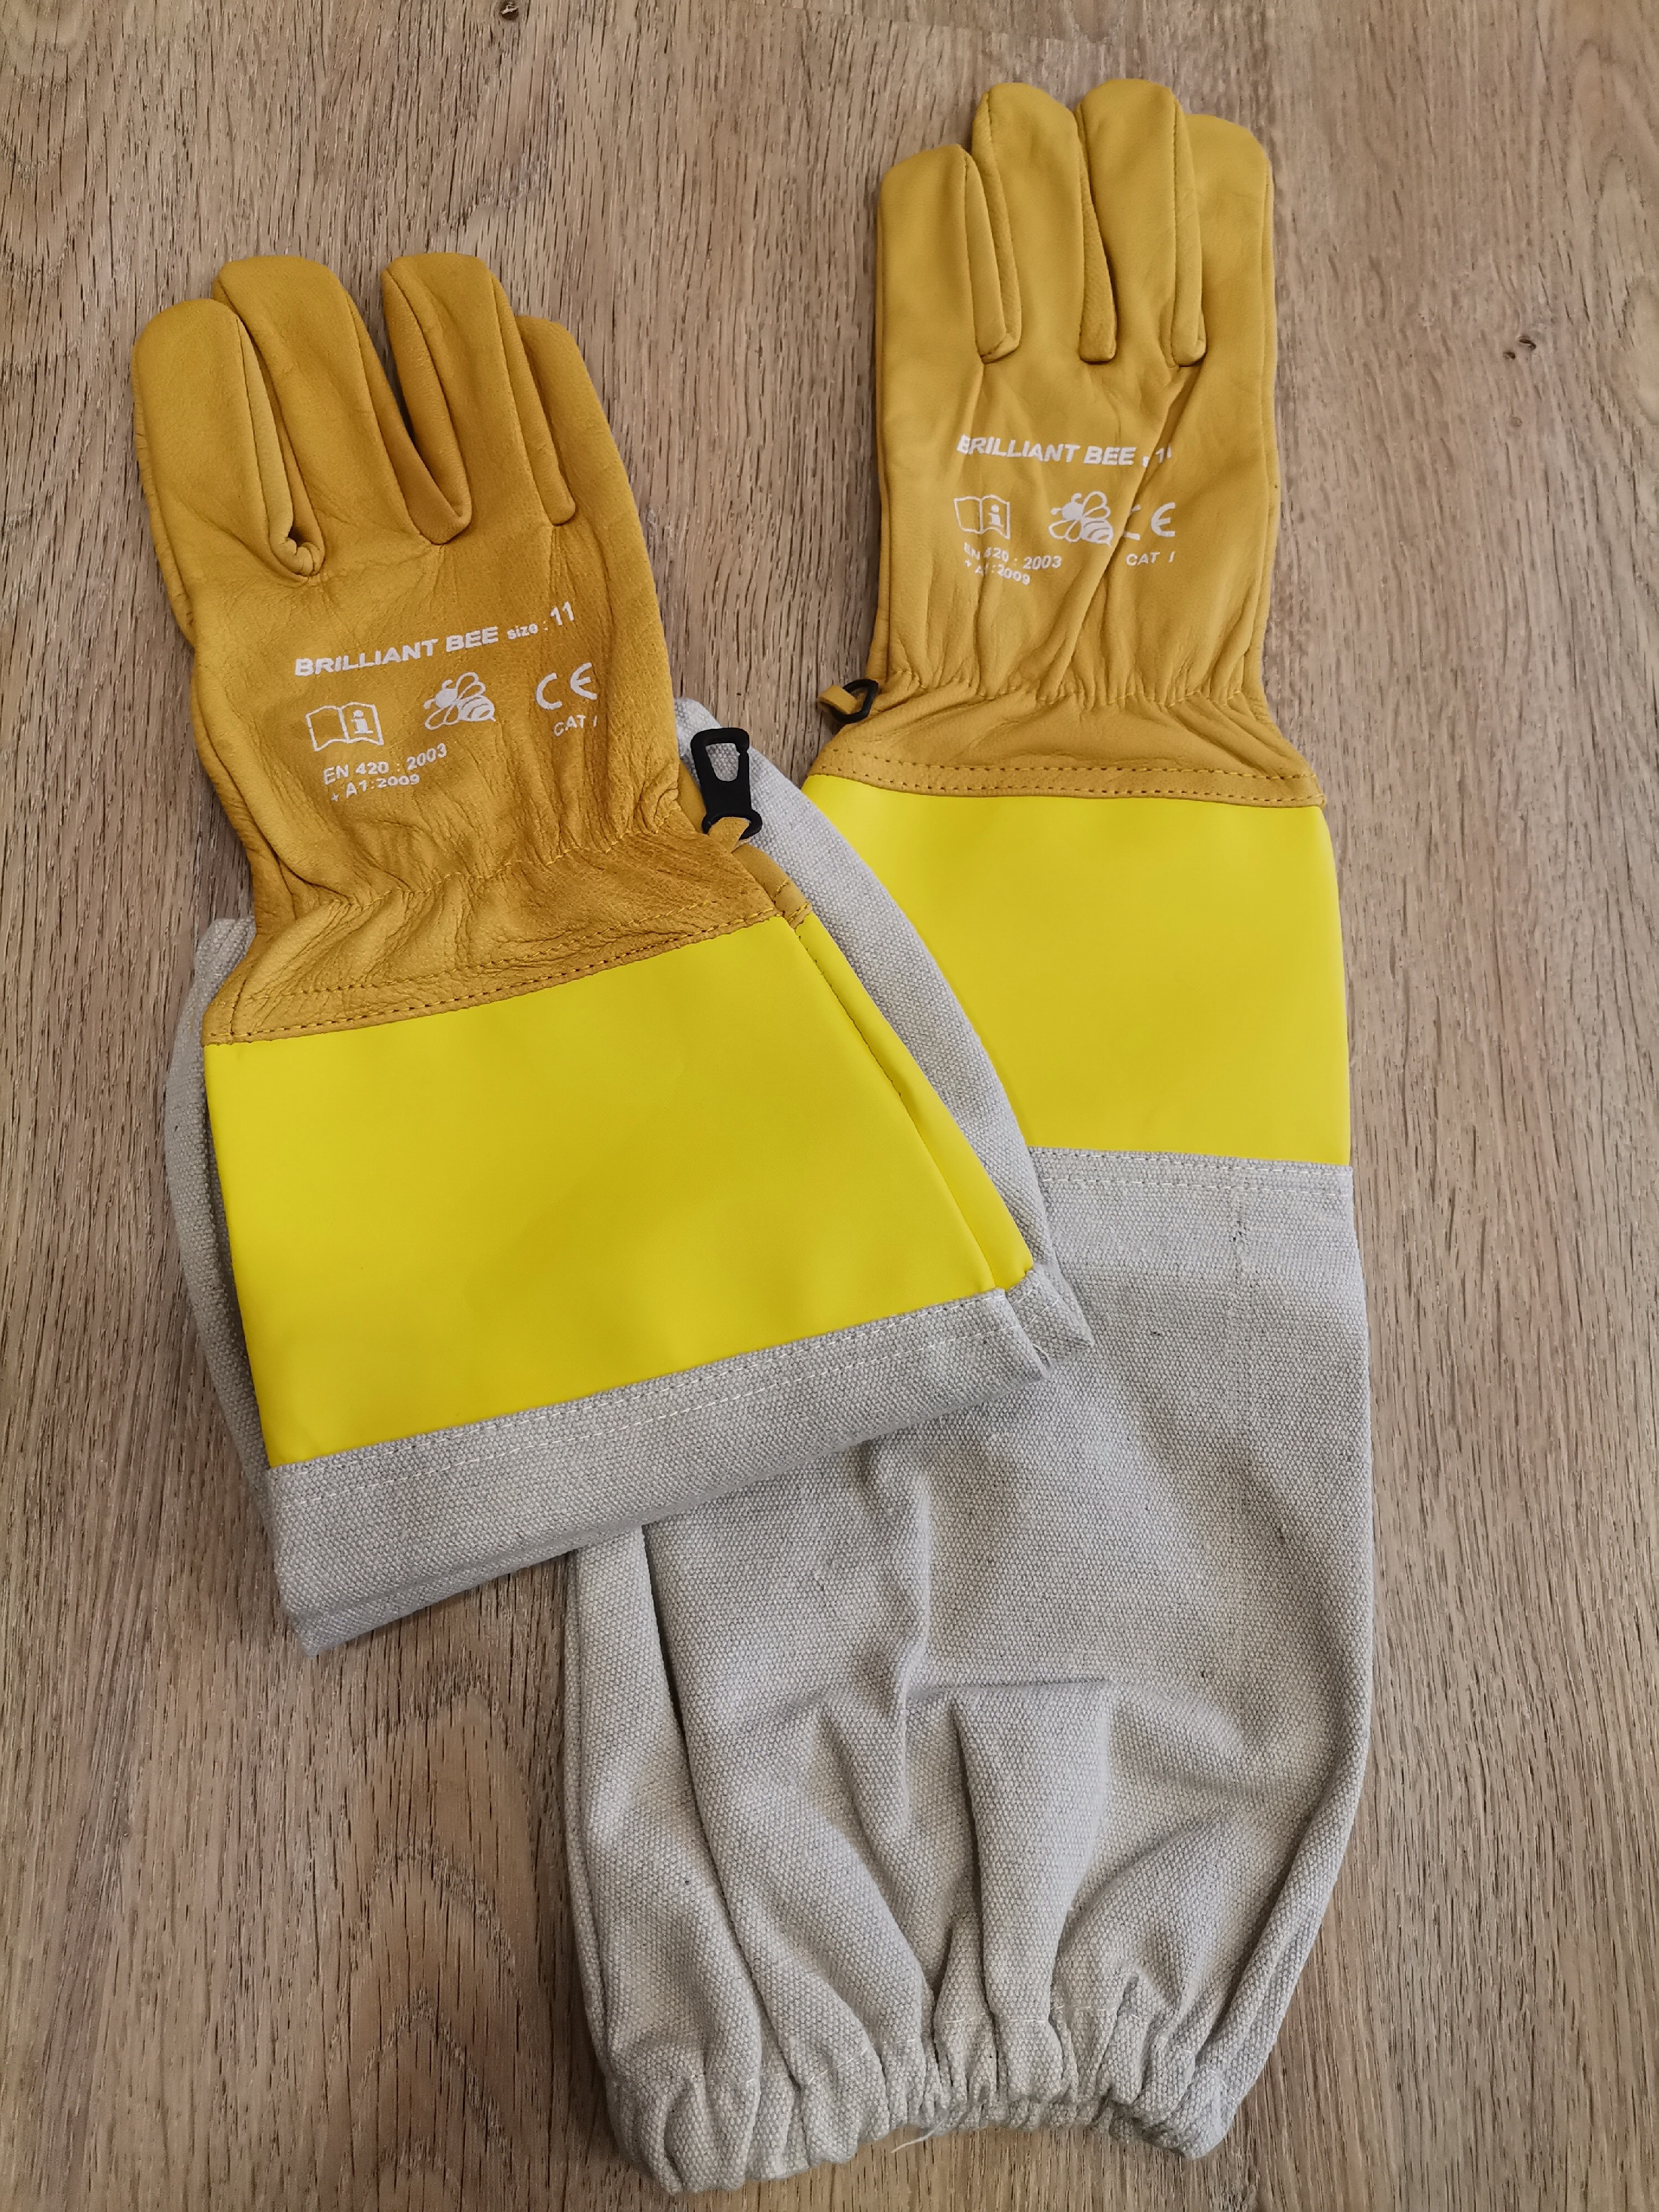 Včelařské rukavice deluxe - žluté, velikost 11